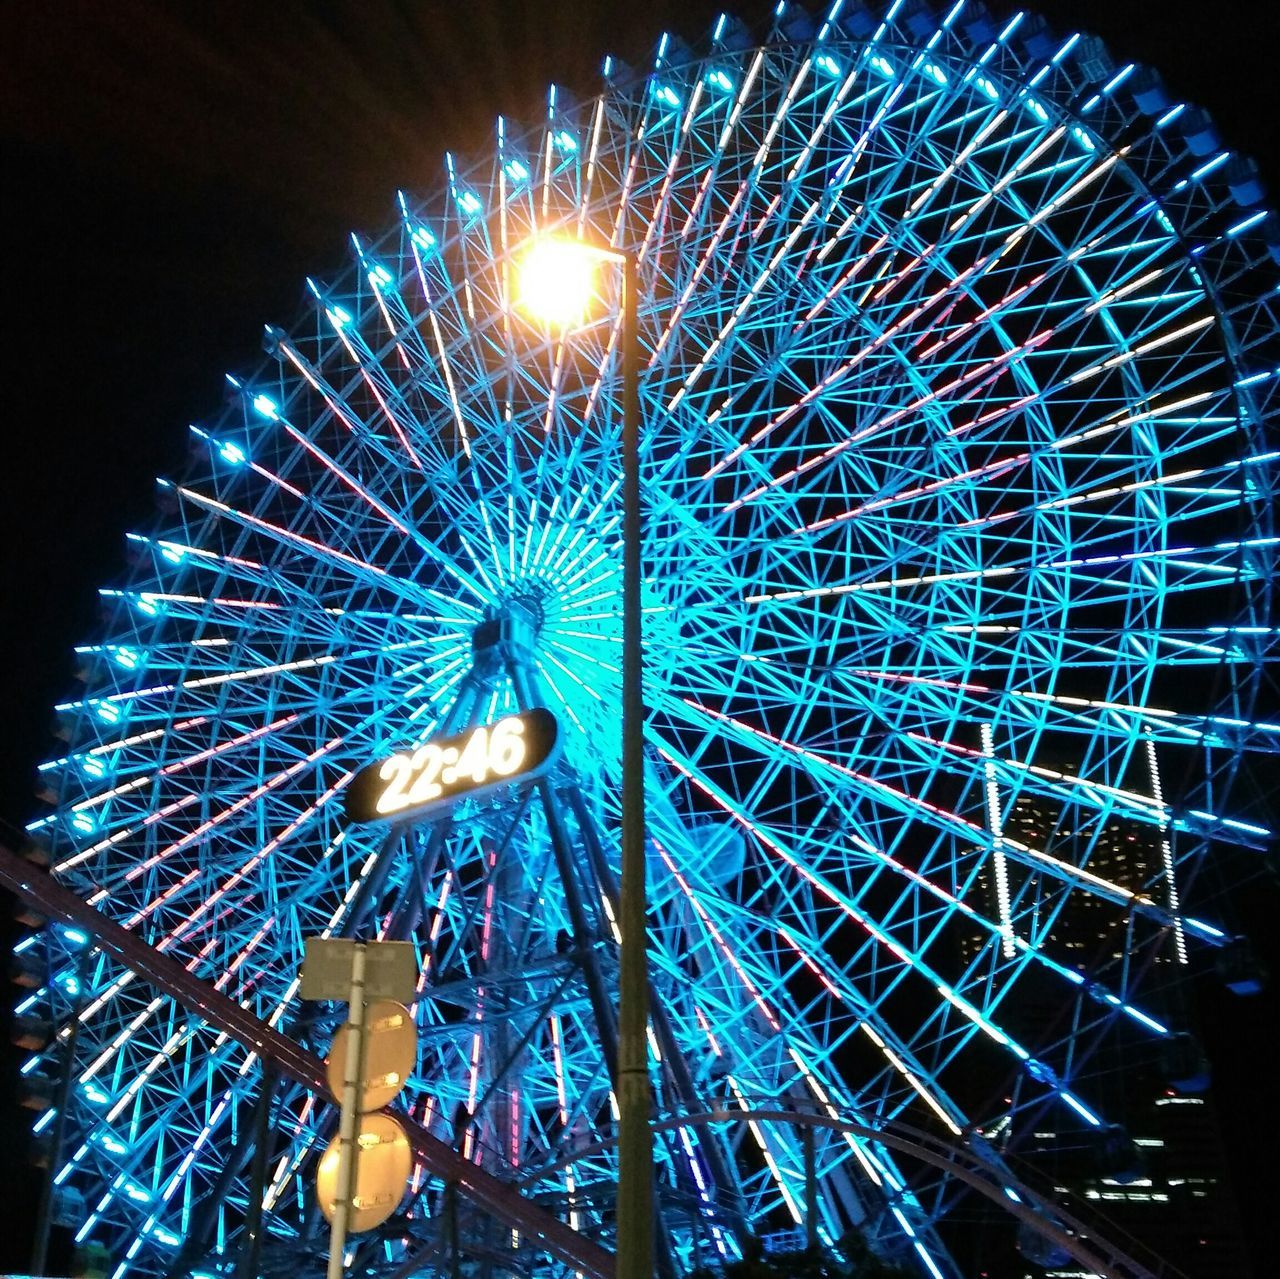 arts culture and entertainment, amusement park, ferris wheel, low angle view, amusement park ride, illuminated, sky, fun, blue, enjoyment, tourism, multi colored